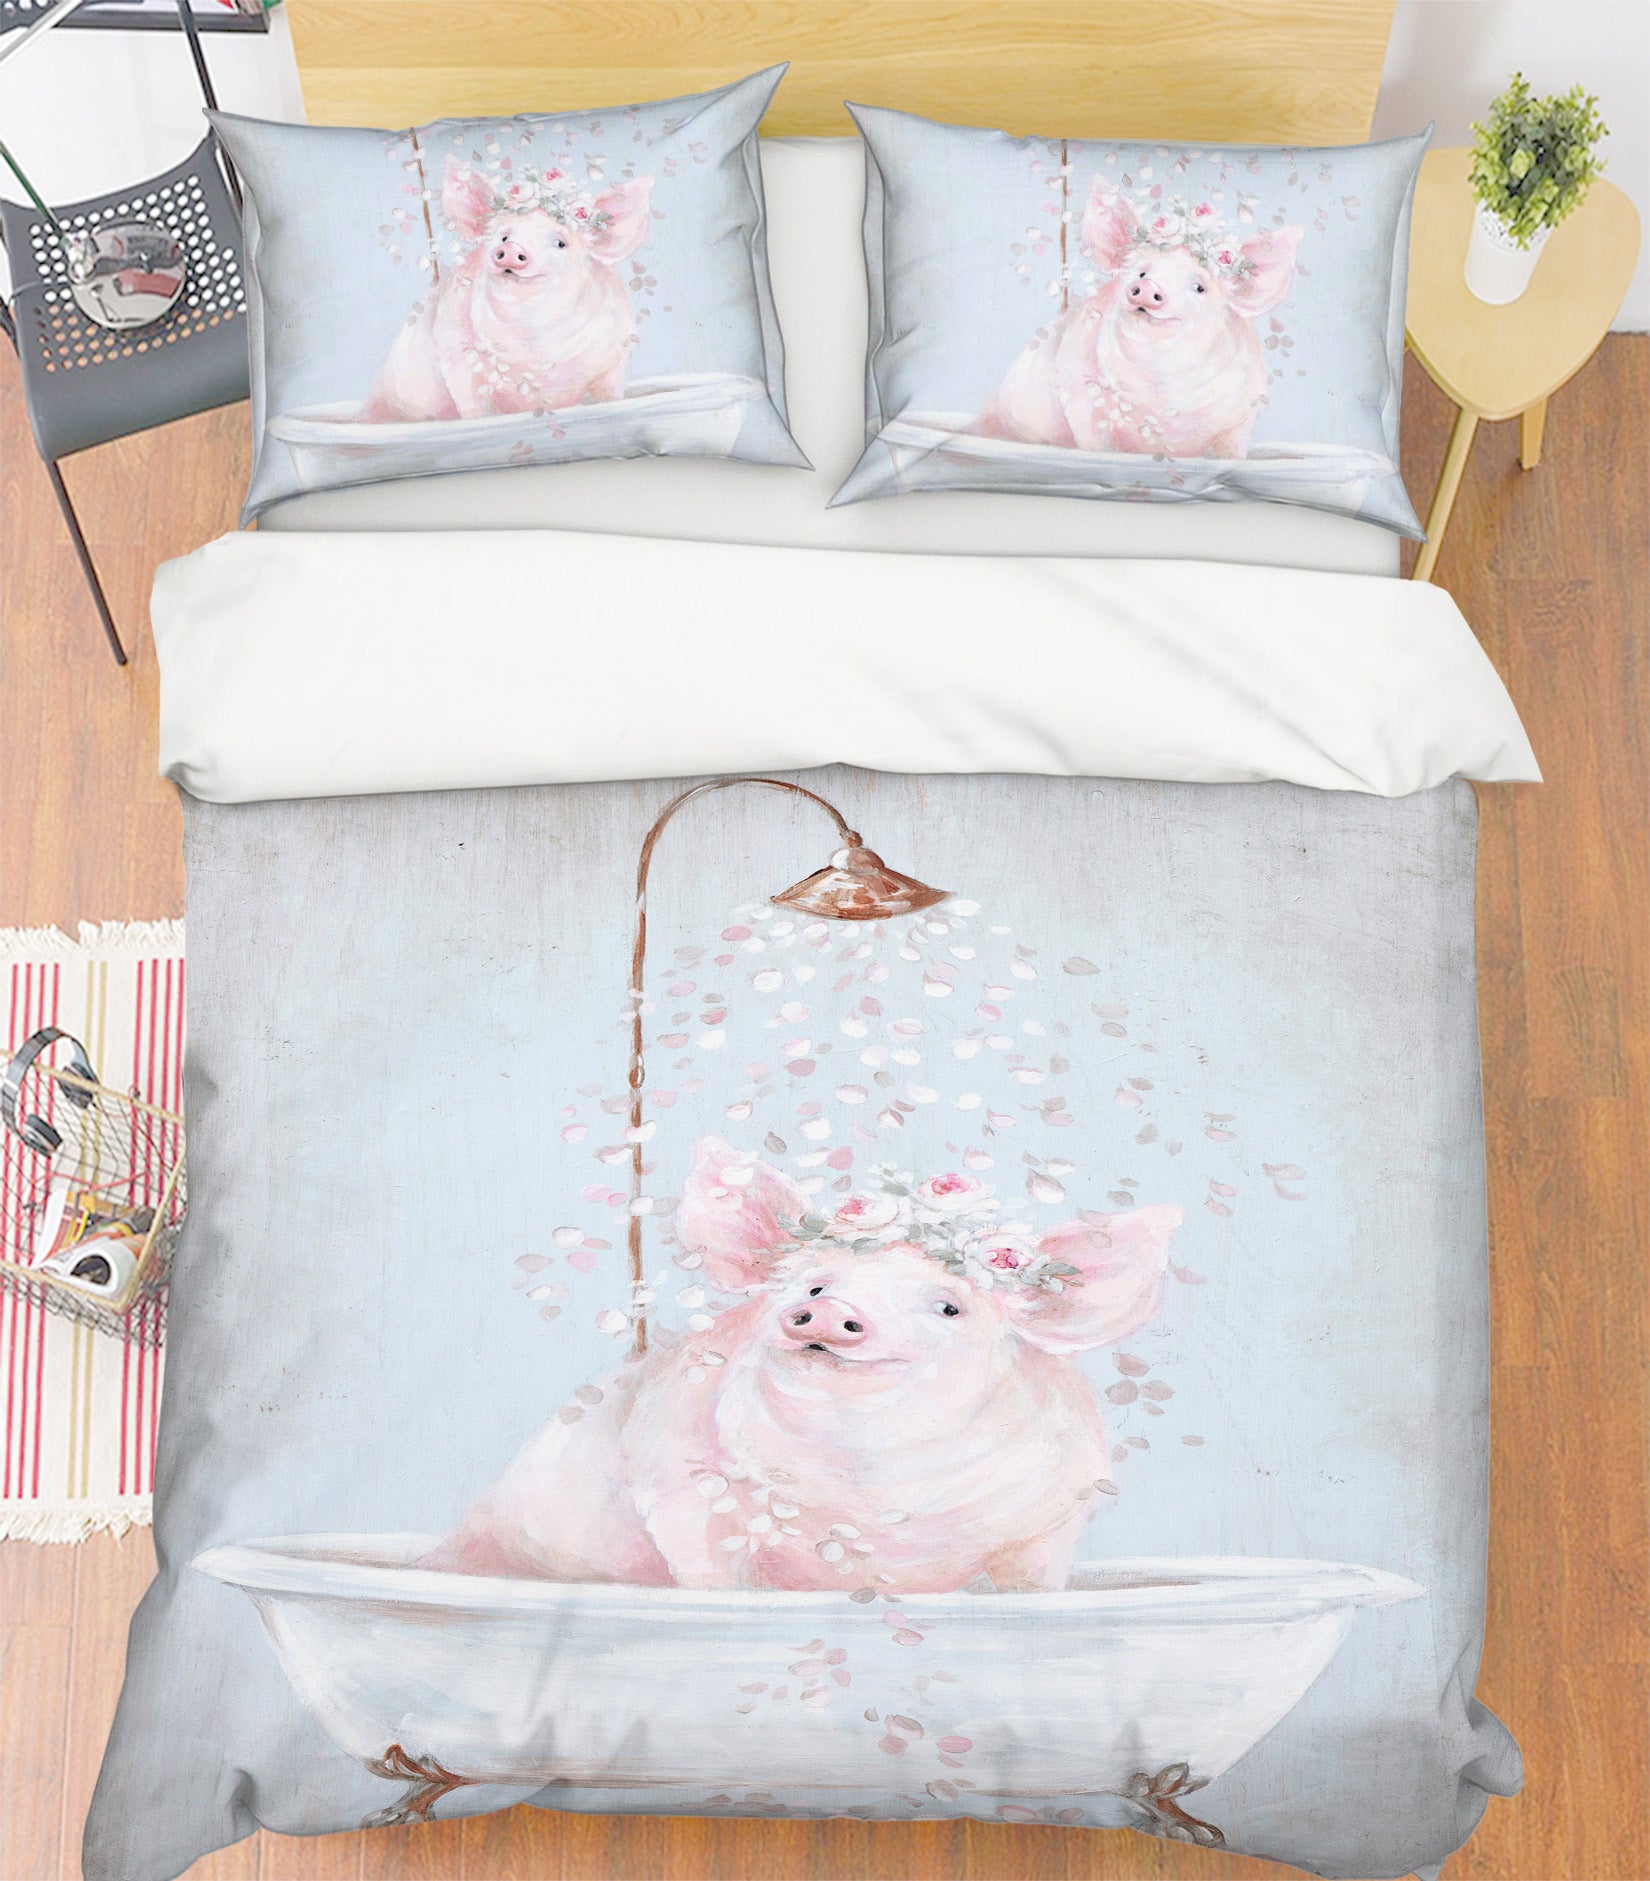 3D Wreath Pig Bath 2040 Debi Coules Bedding Bed Pillowcases Quilt